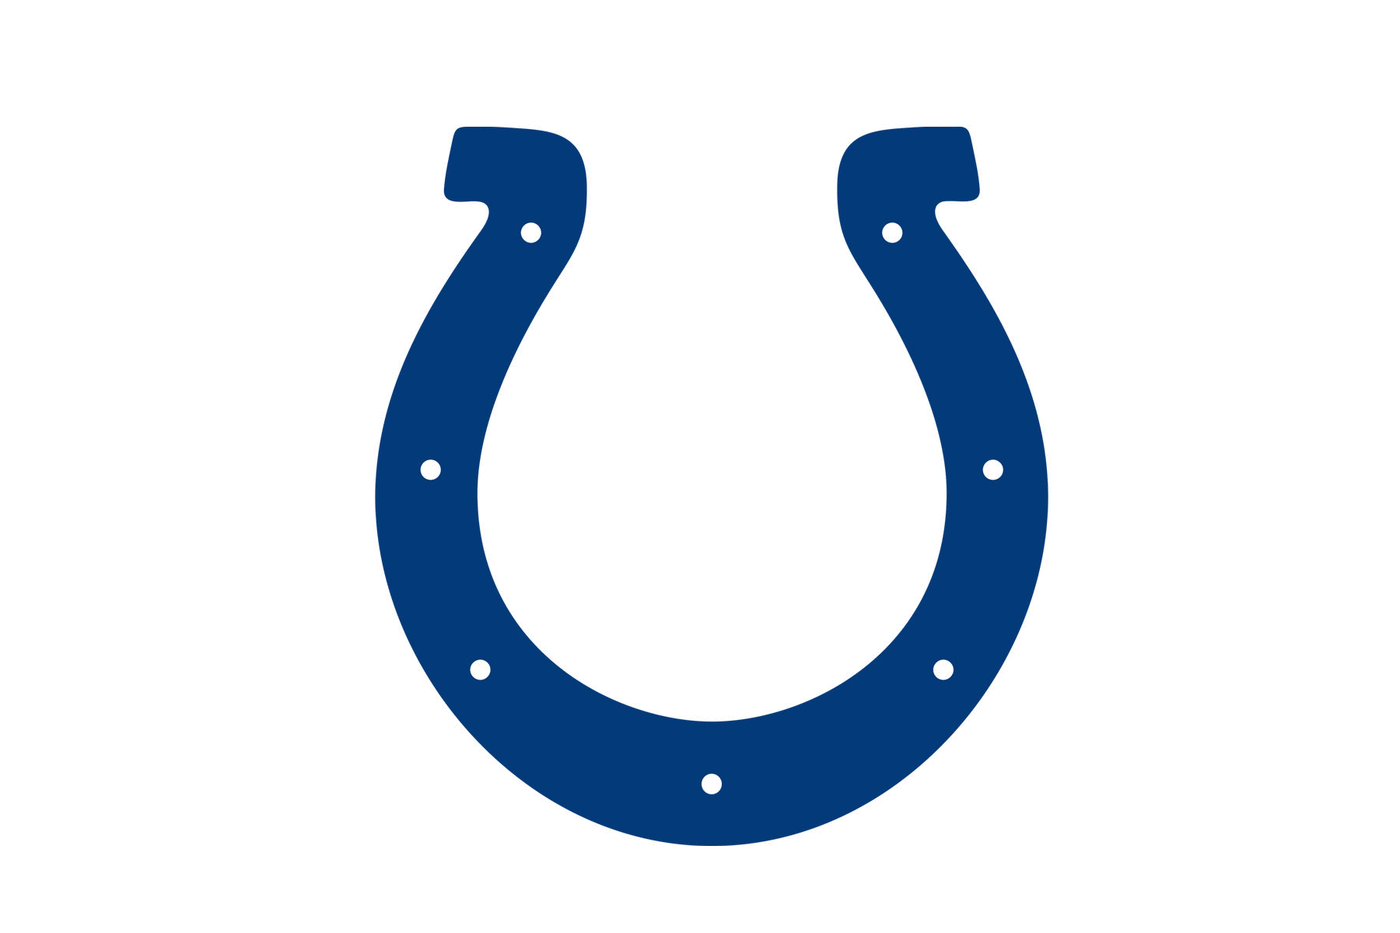 Indianapolis Colts Football Helmet